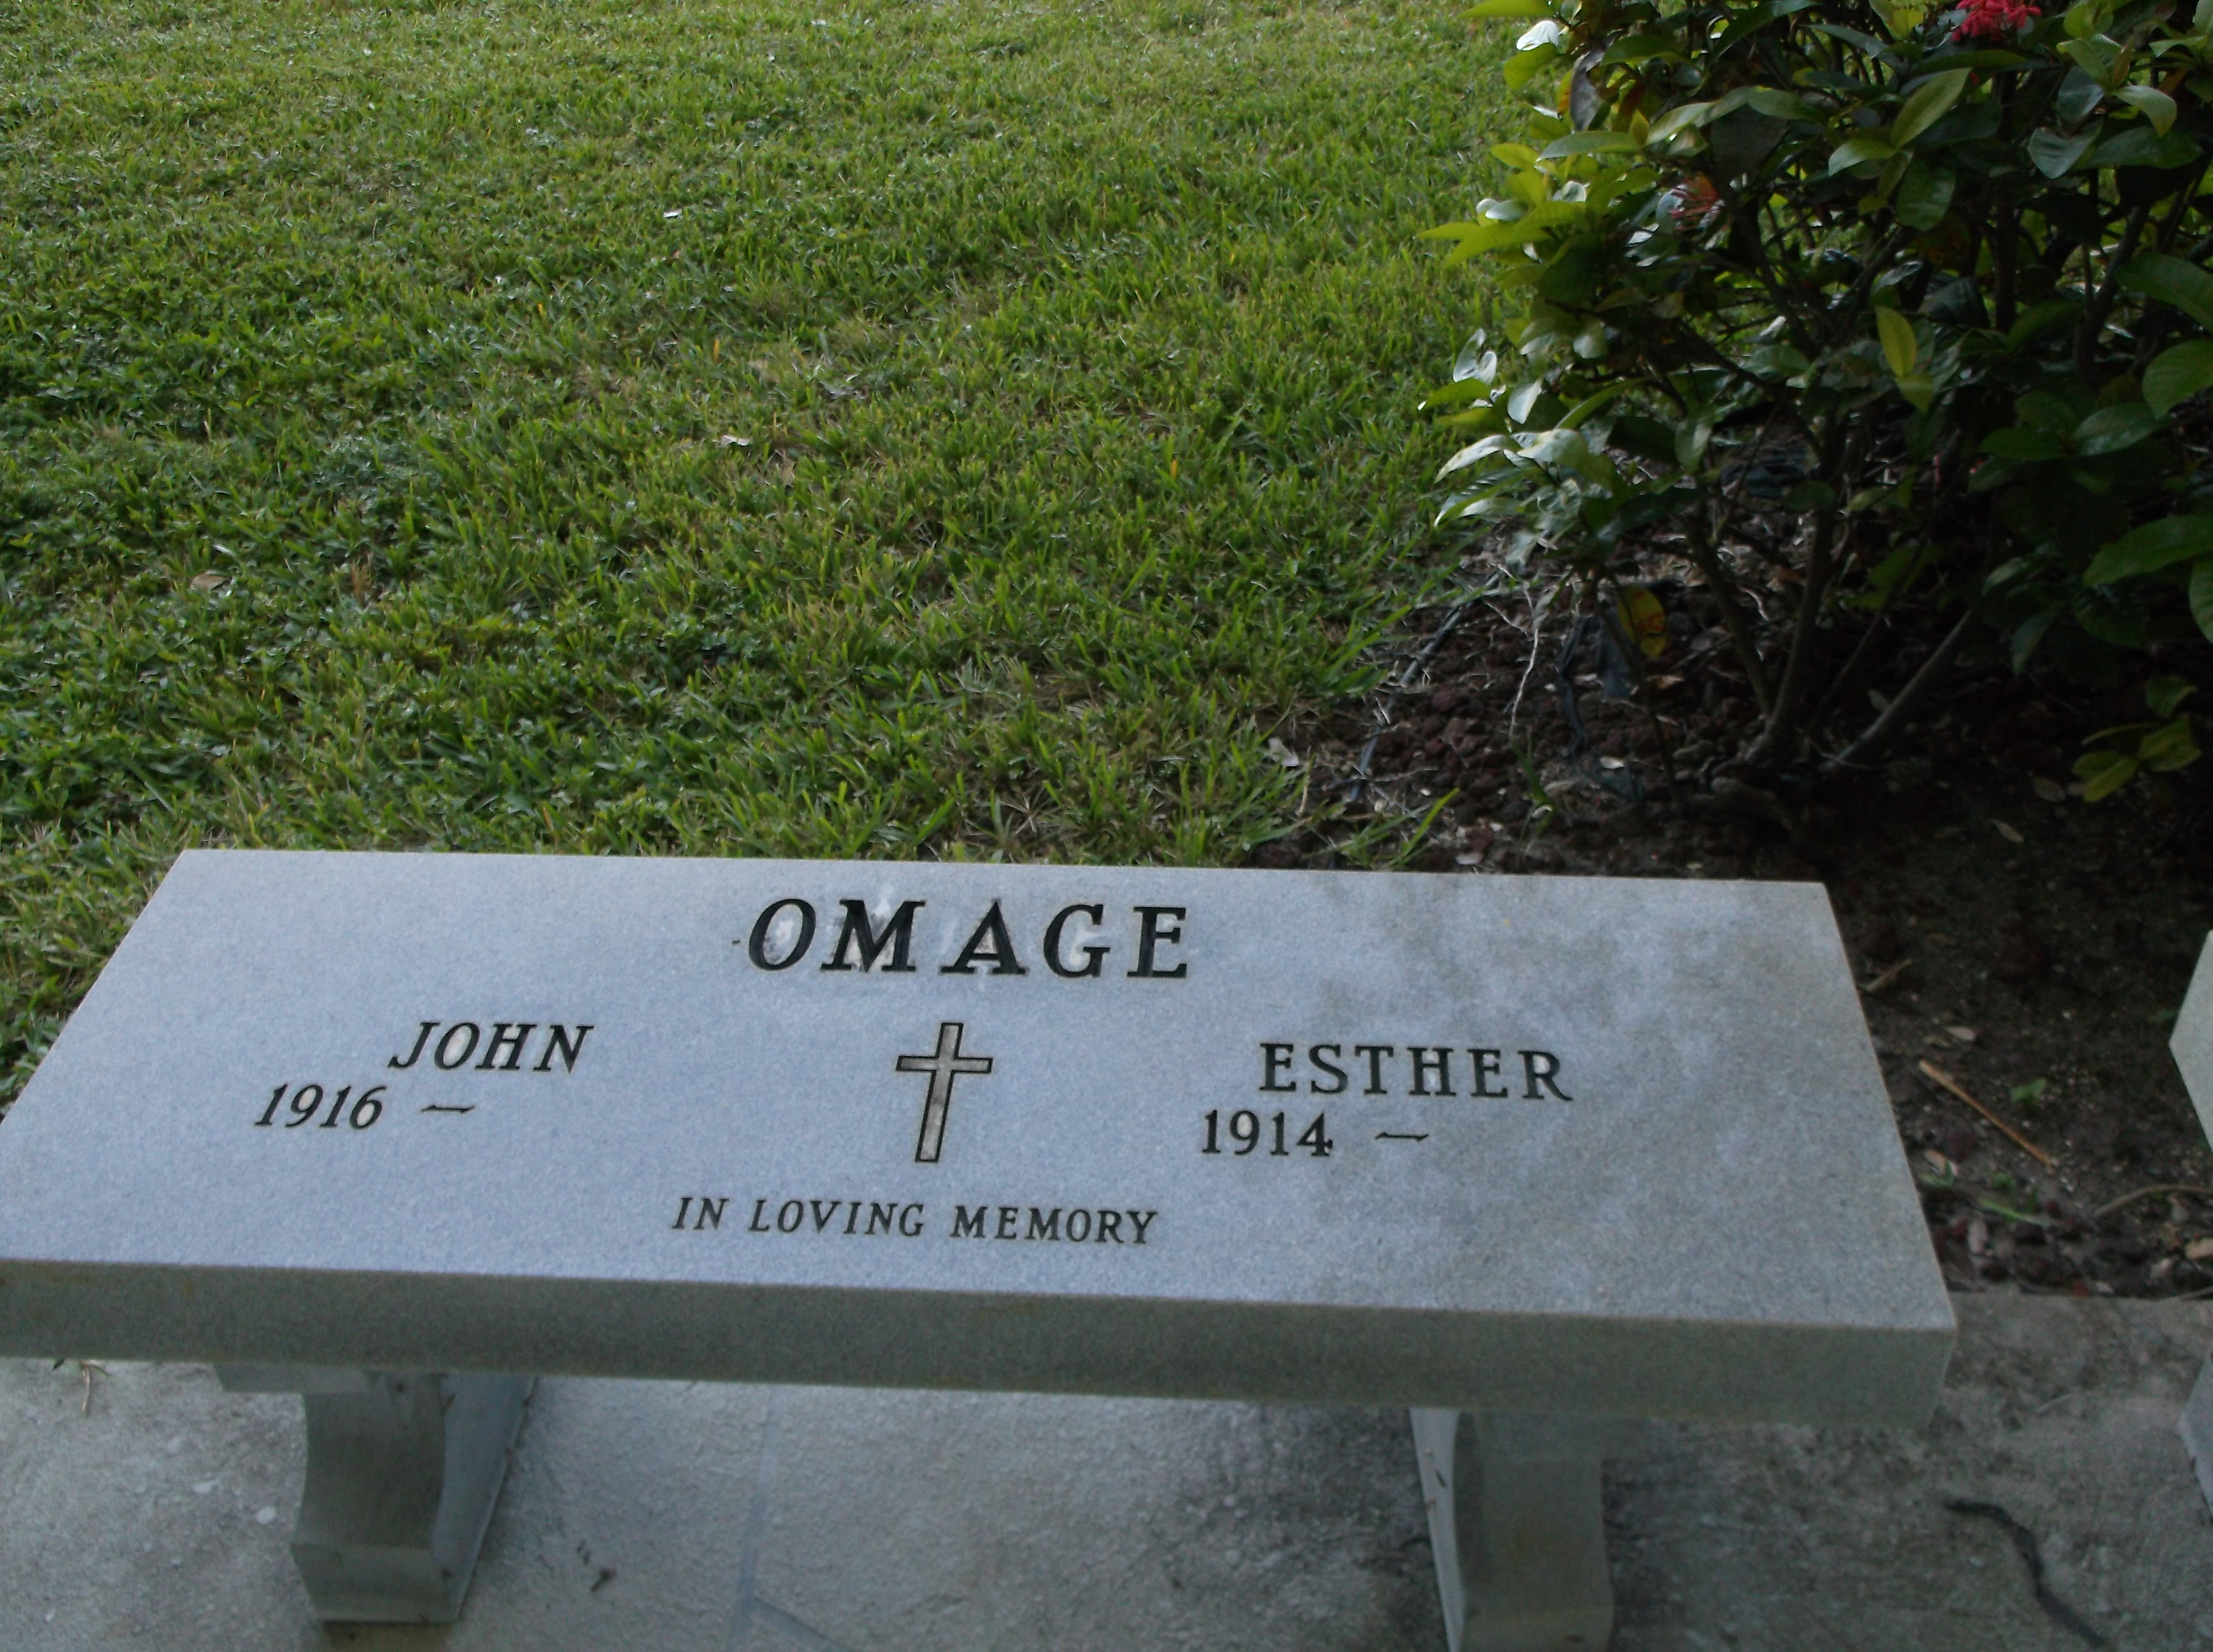 John Omage